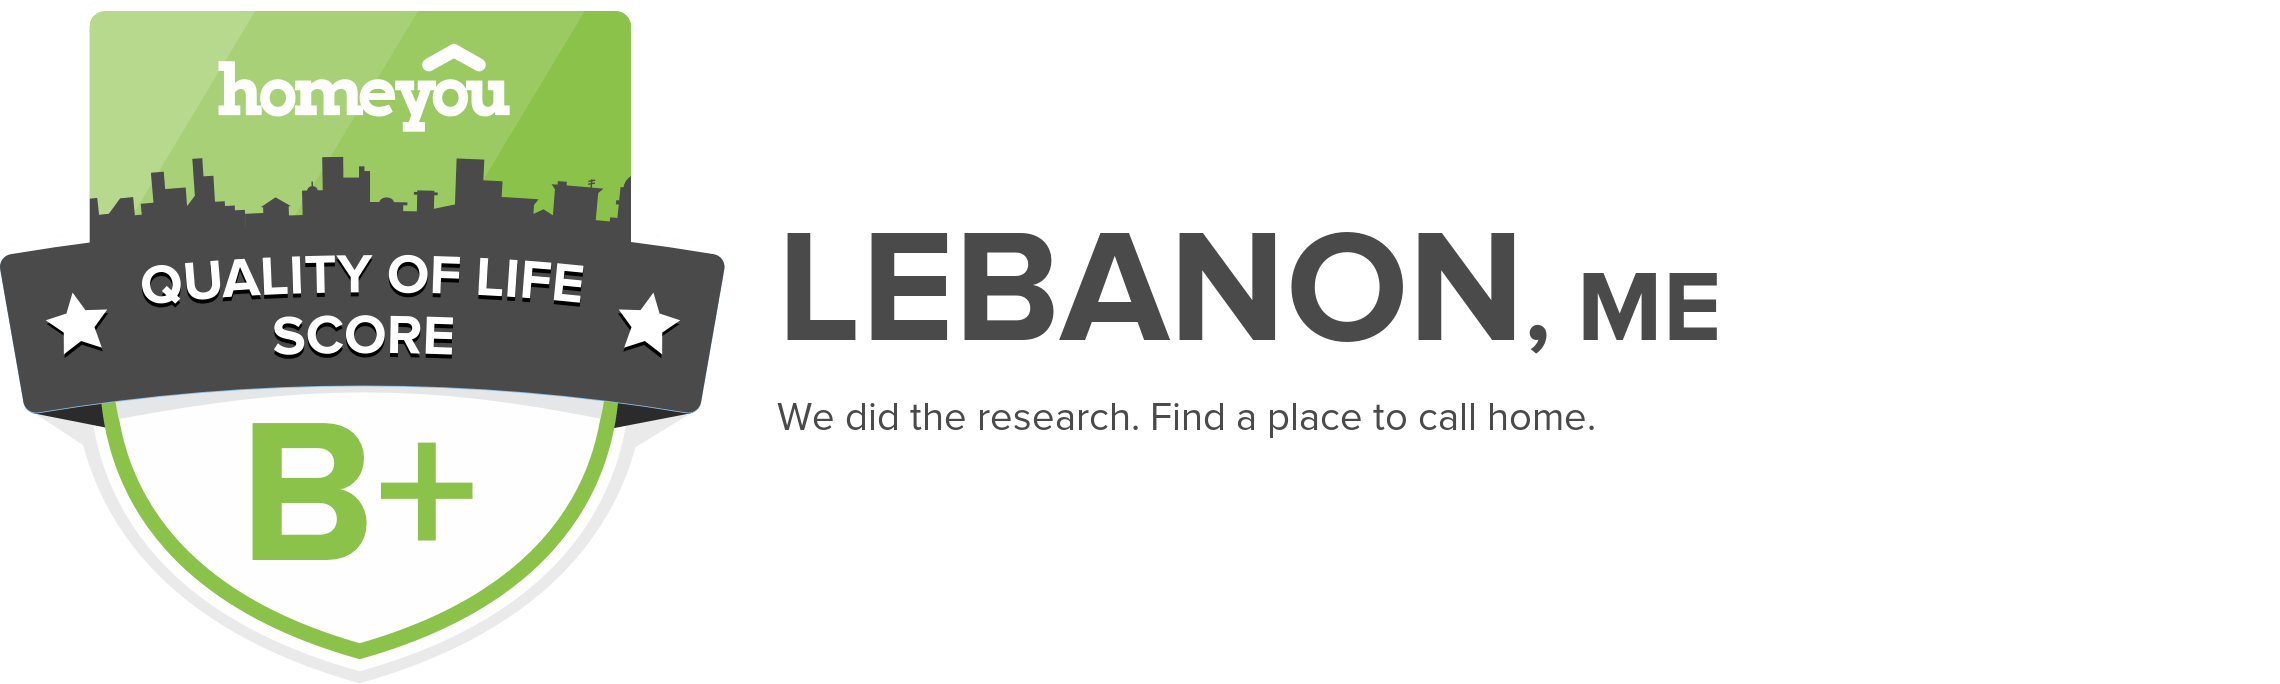 Lebanon, ME